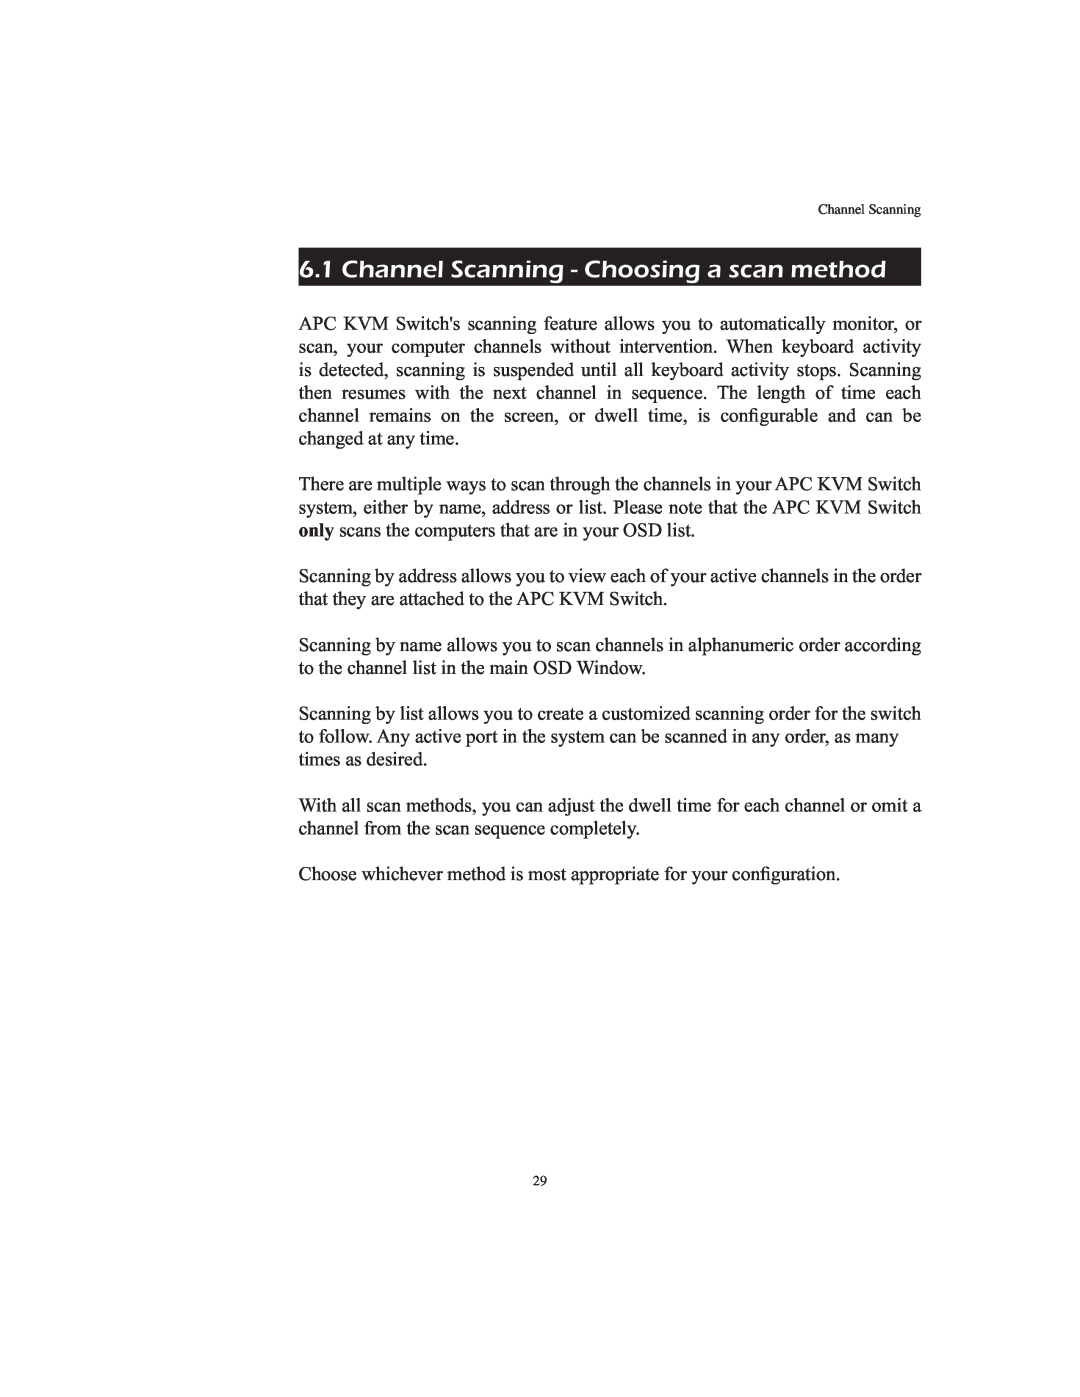 APC AP9268 manual Channel Scanning - Choosing a scan method 